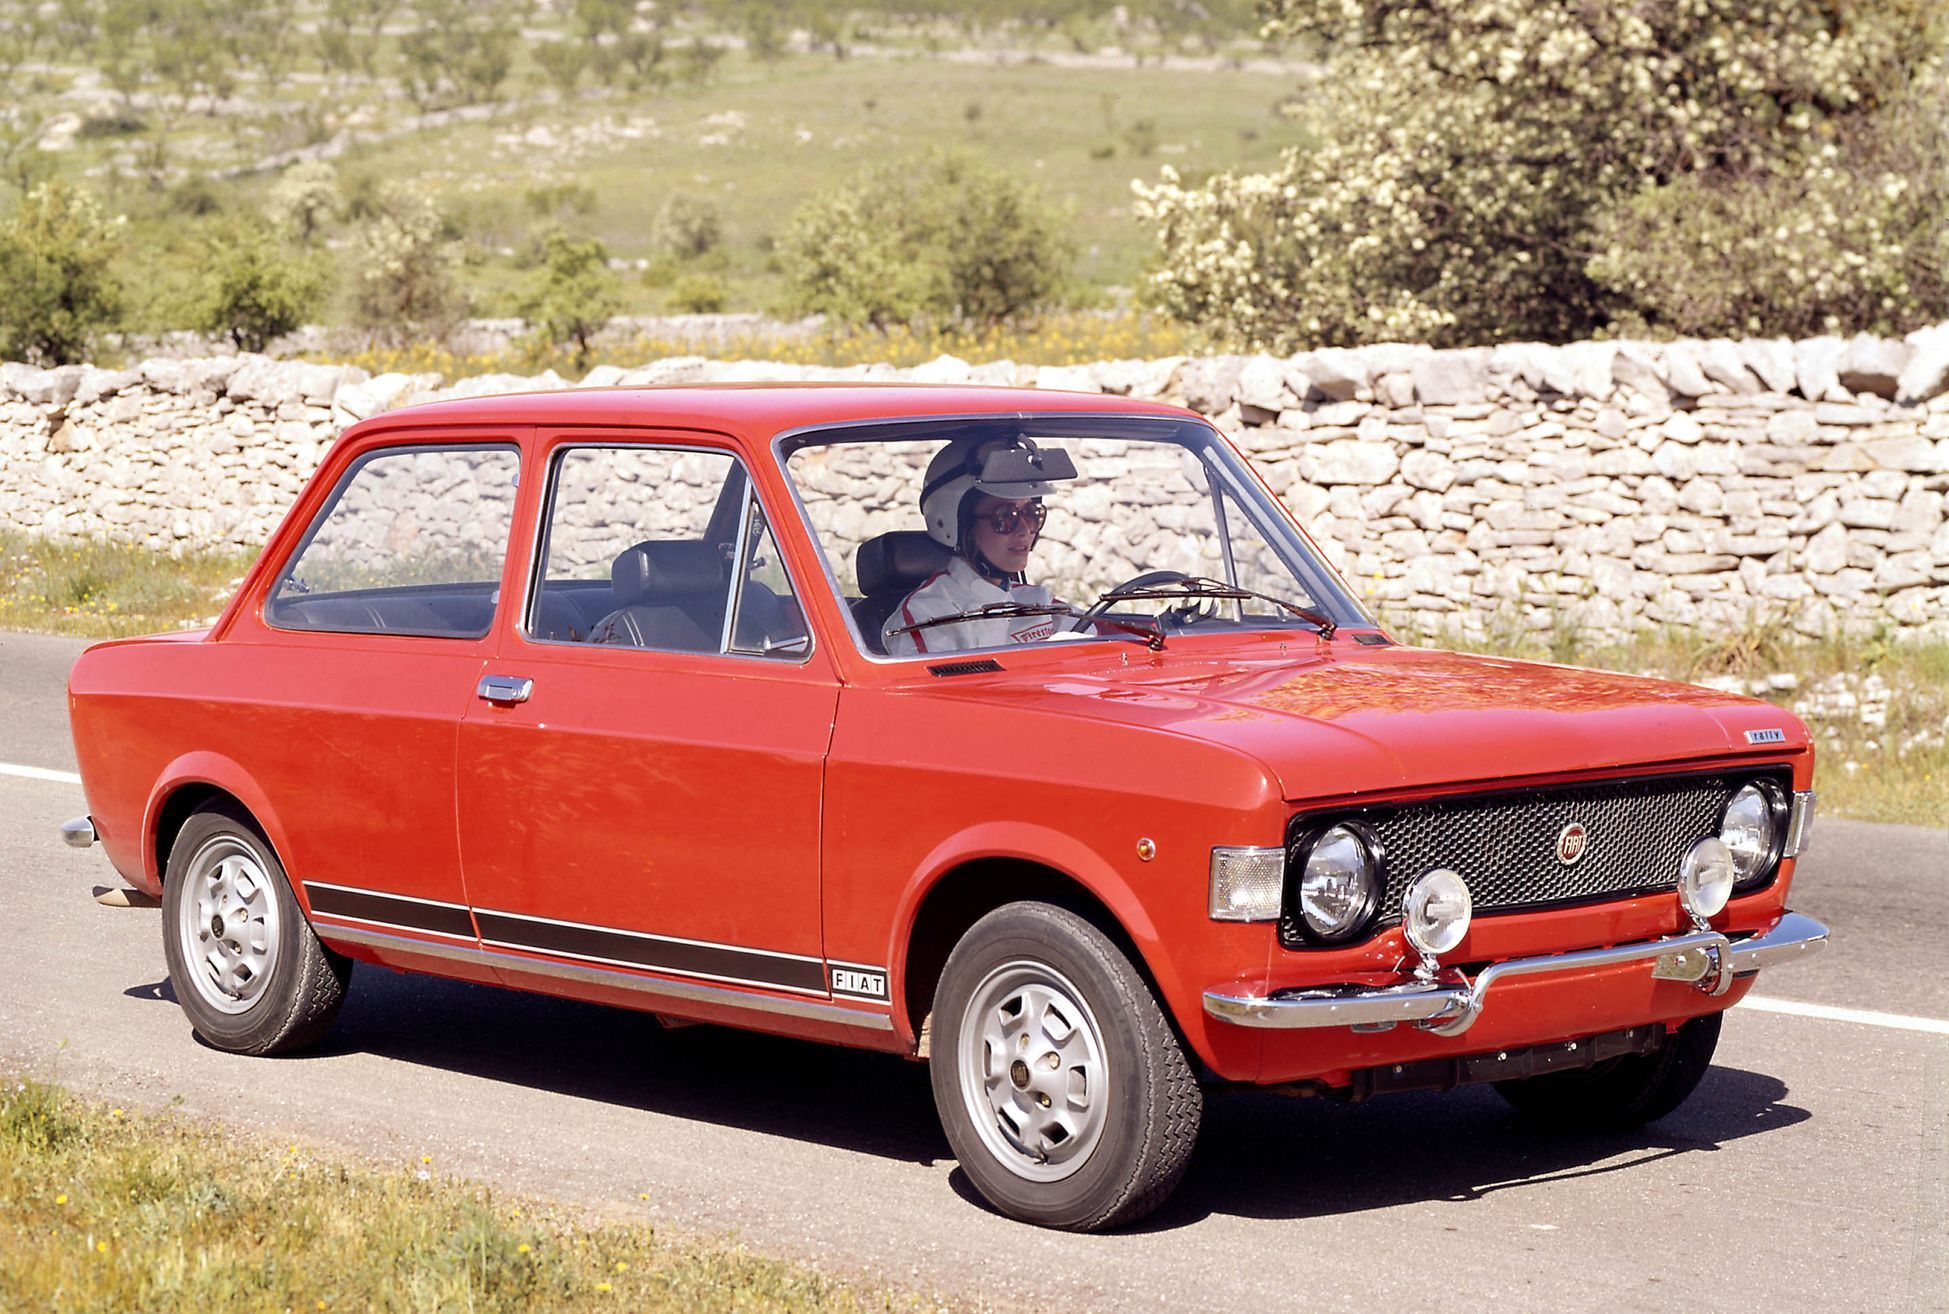 Год выпуска фиат. Фиат 128. Фиат 128 ралли. Fiat 128 1972.